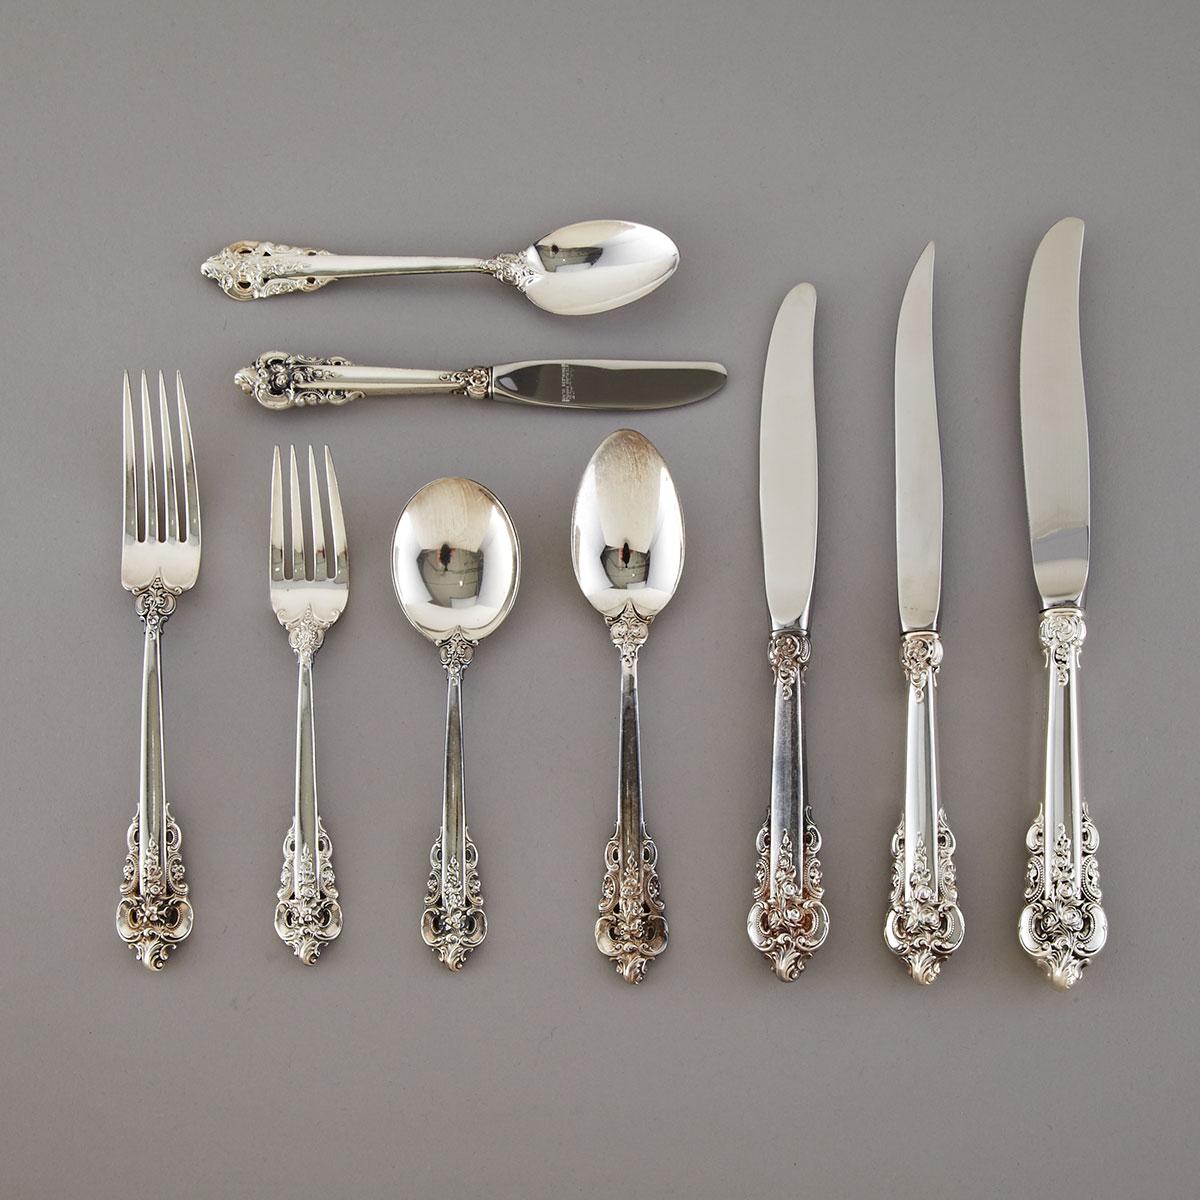 American Silver ‘Grande Baroque’ Pattern Flatware Service, Wallace Silversmiths, Wallingford, Ct., 20th century